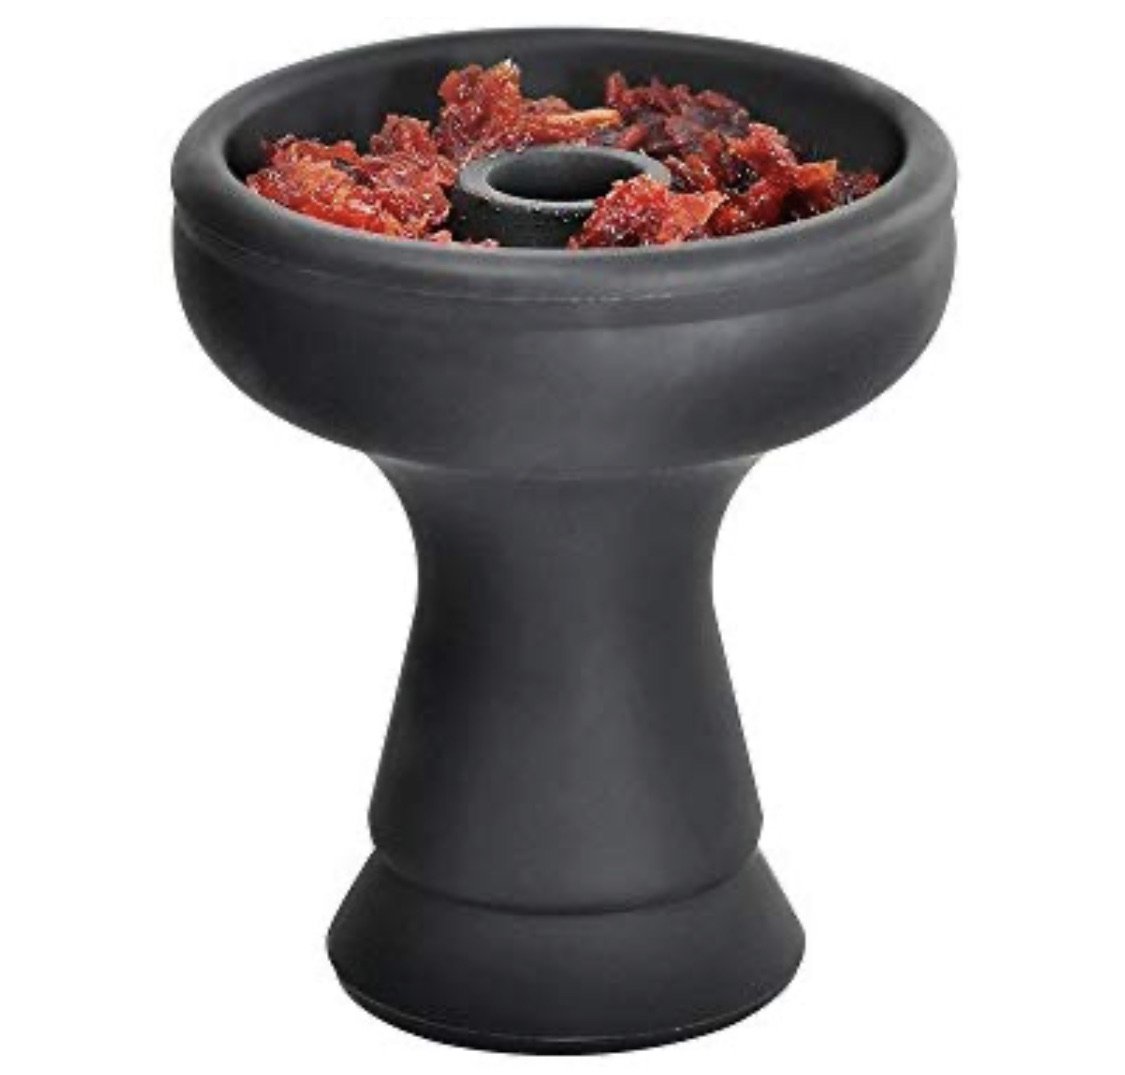 Ceramic One Hole Hookah Bowl With Anti Hot Rope Hookah Head Shisha Phunnel  Bowl Chicha Nargile Ceramic Bowl From Bigbenhu, $3.71